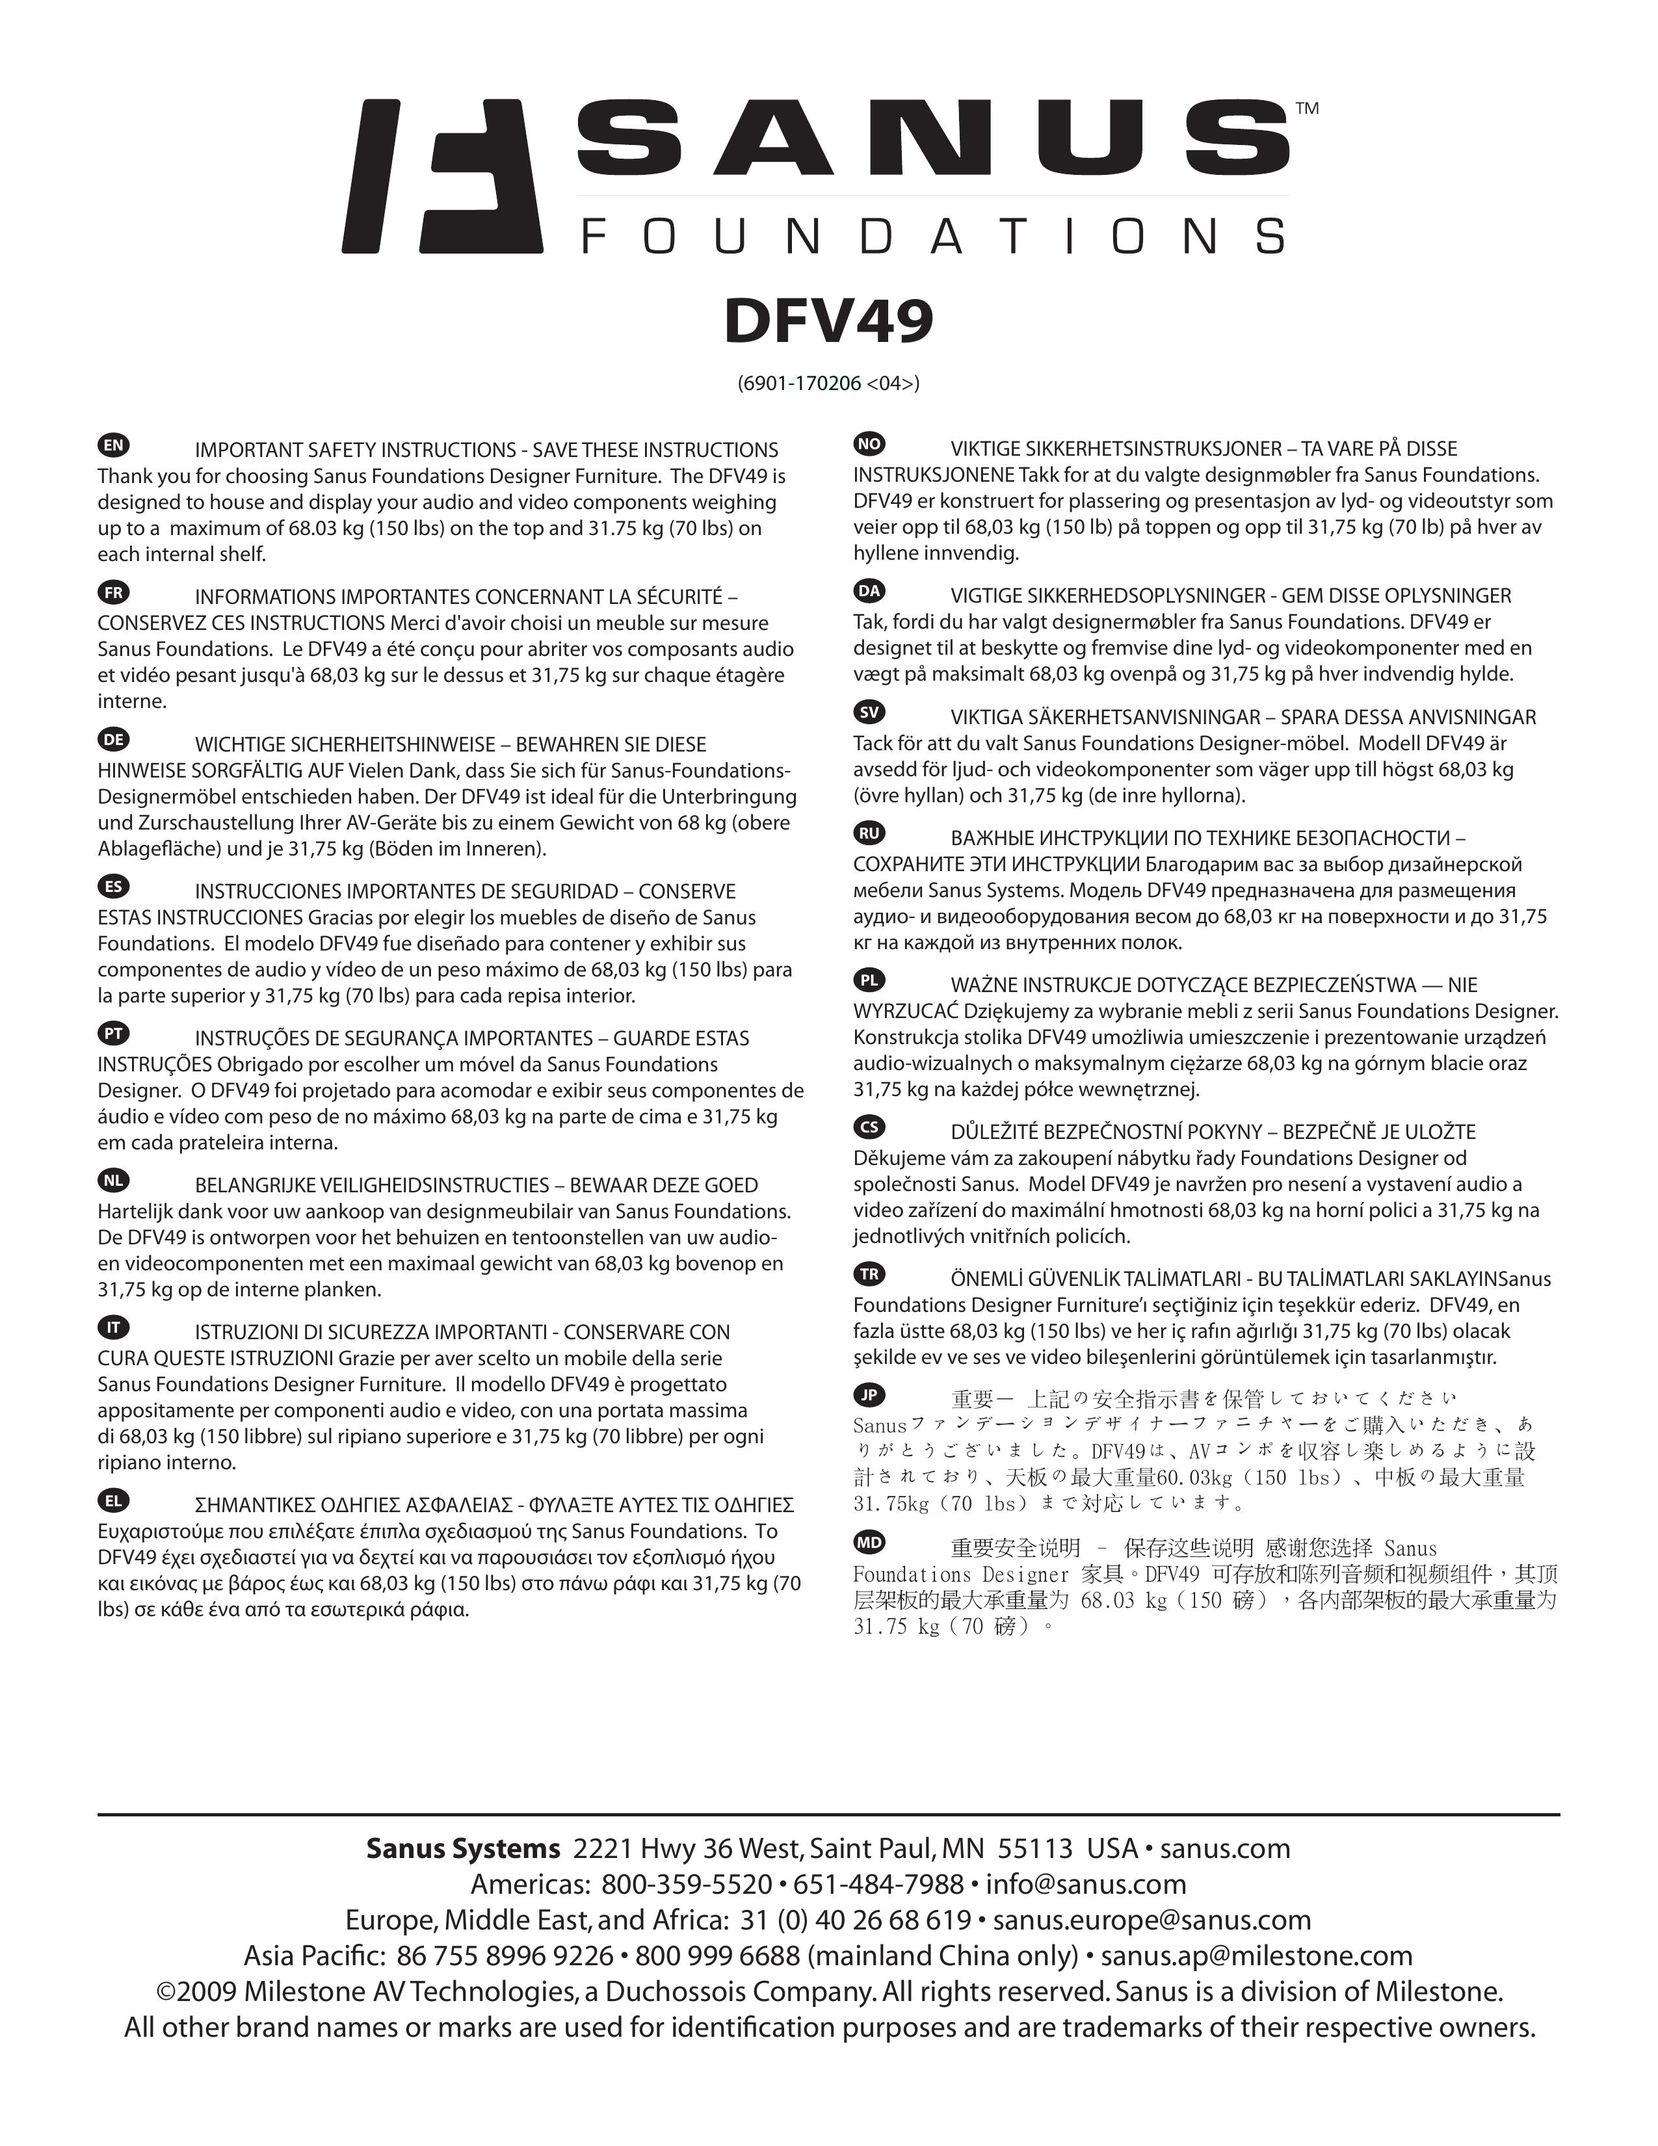 Sanus Systems DFV49 Indoor Furnishings User Manual